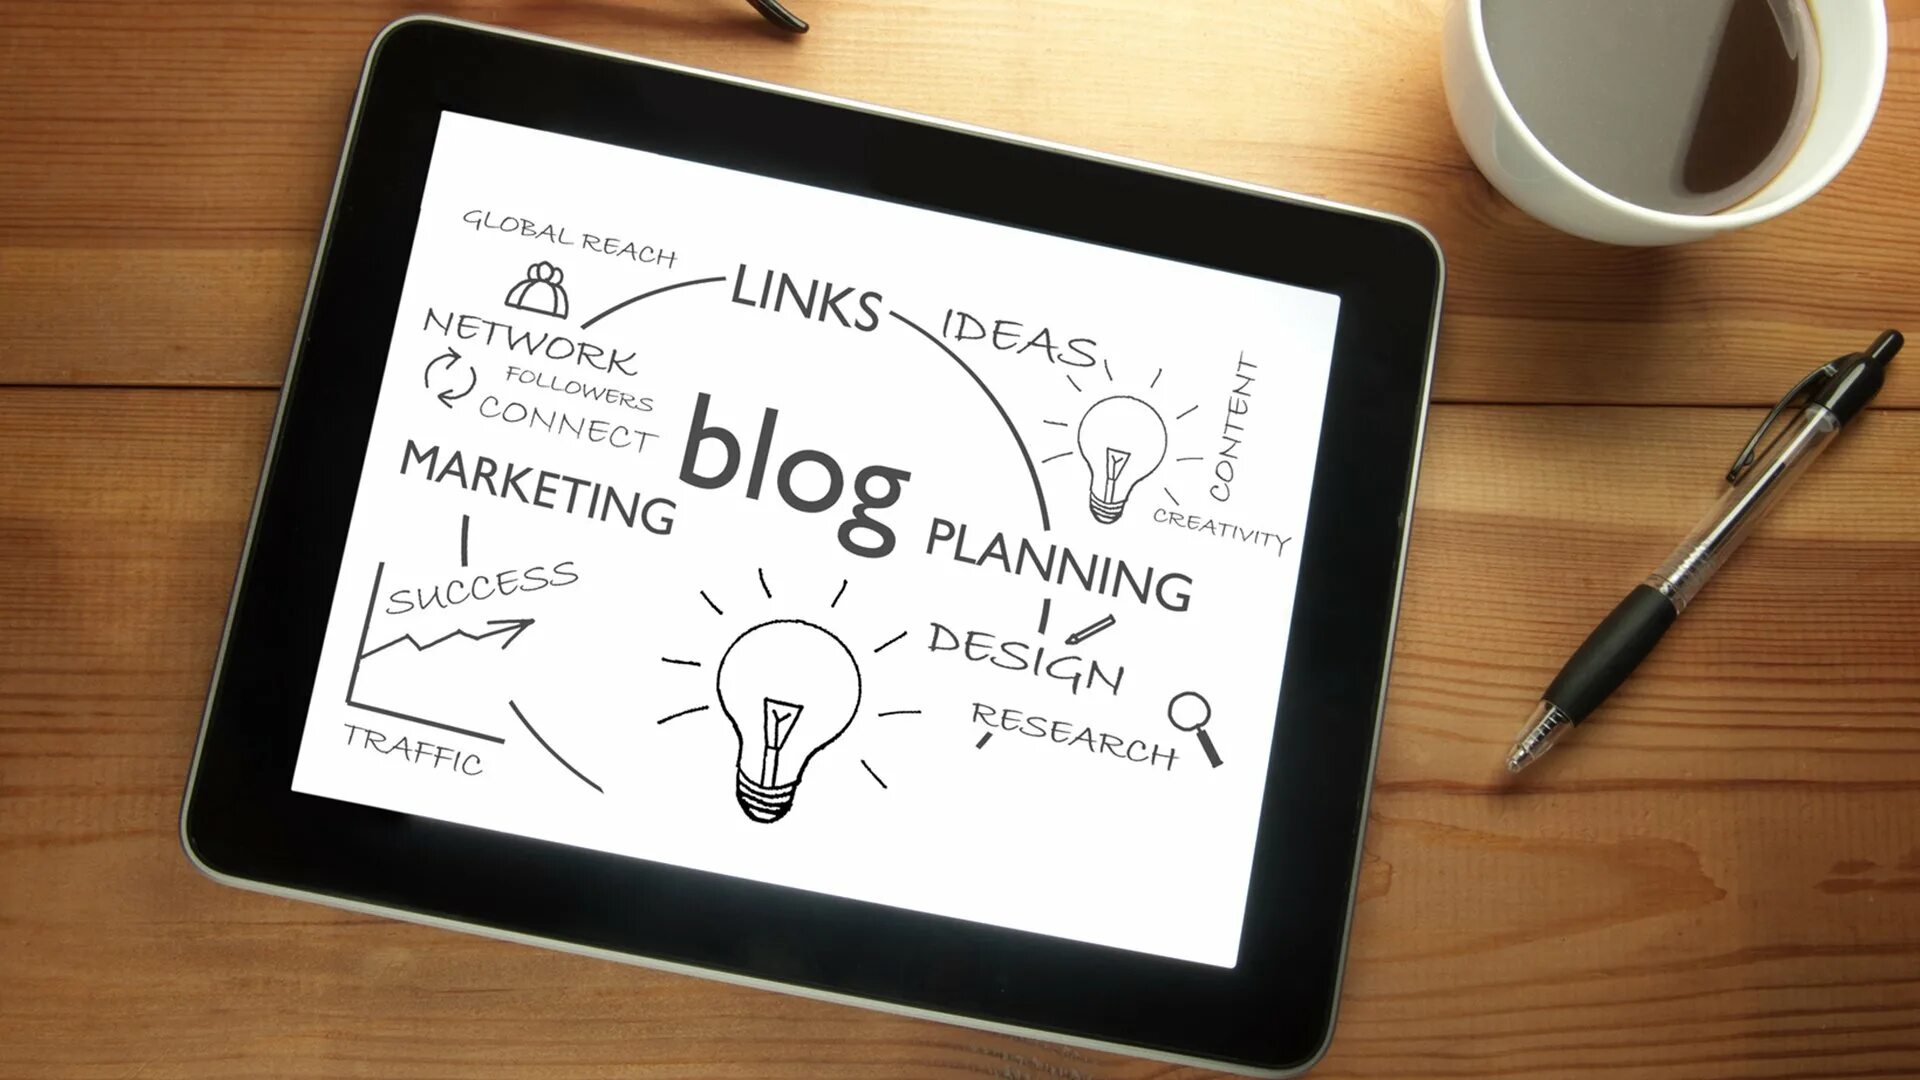 Users blogs. Блог-маркетинг. Блог компании. Blog. Мини блог.